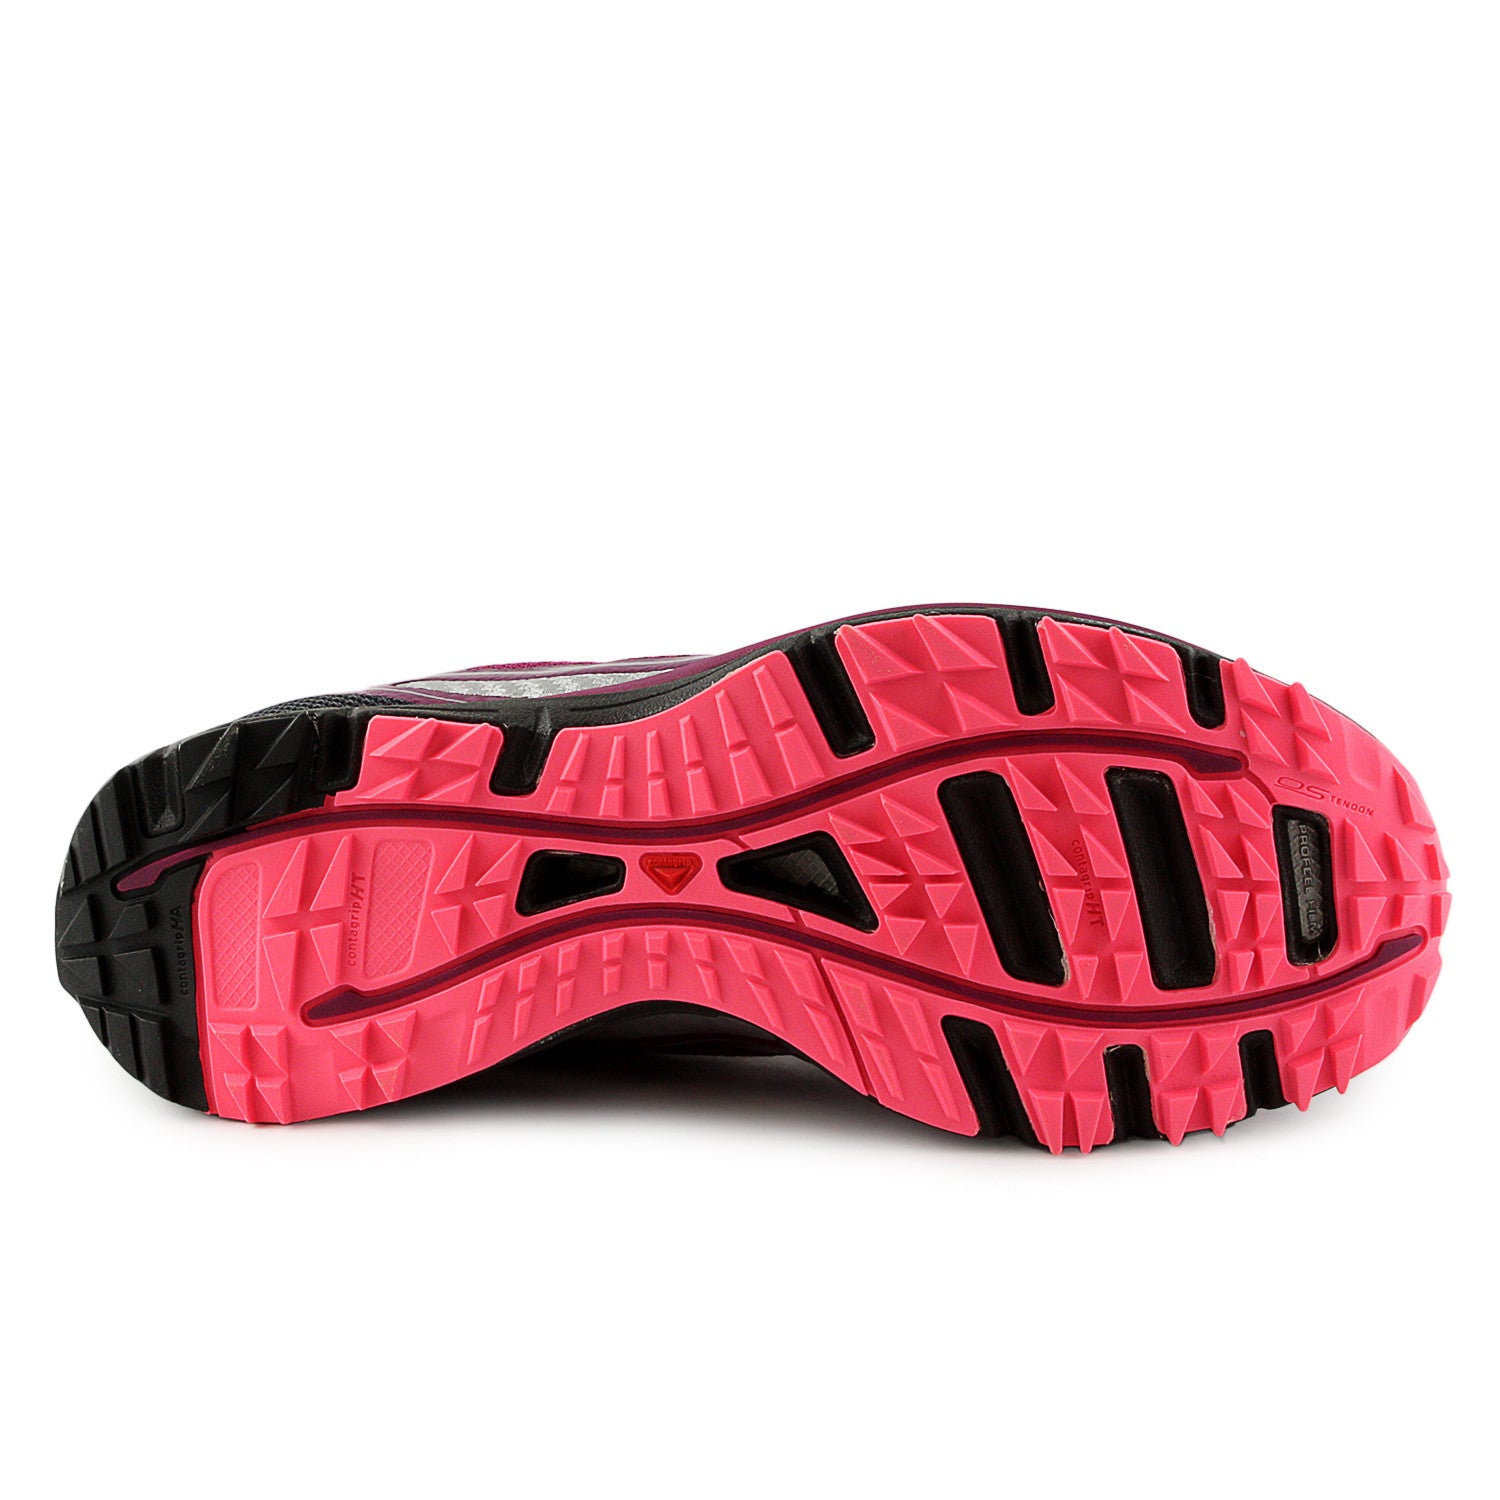 Salomon Sense PRO W Trail Running Shoe Purple/Black/Pink (Womens)  Shoplifestyle